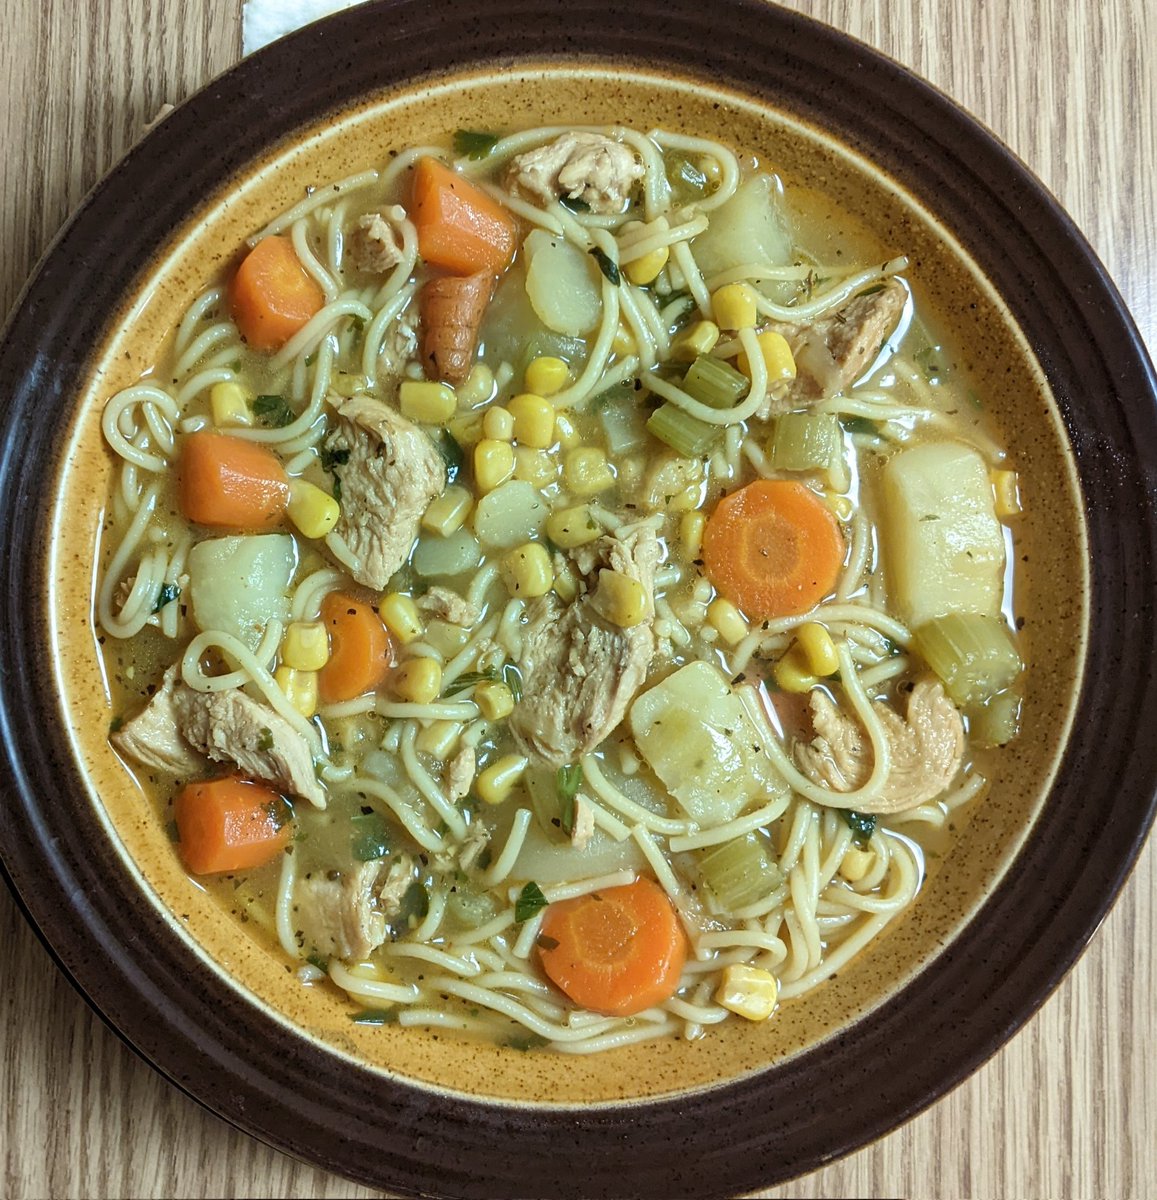 Chicken Noodle Soup

#allkindsofrecipes #testkitchen #chickennoodlesoup #chickennoodle #chickensoup #soup #soupseason #chicken #fideos #noodles #onions #carrots #celery #garlic #corn #potatoes #cilantro